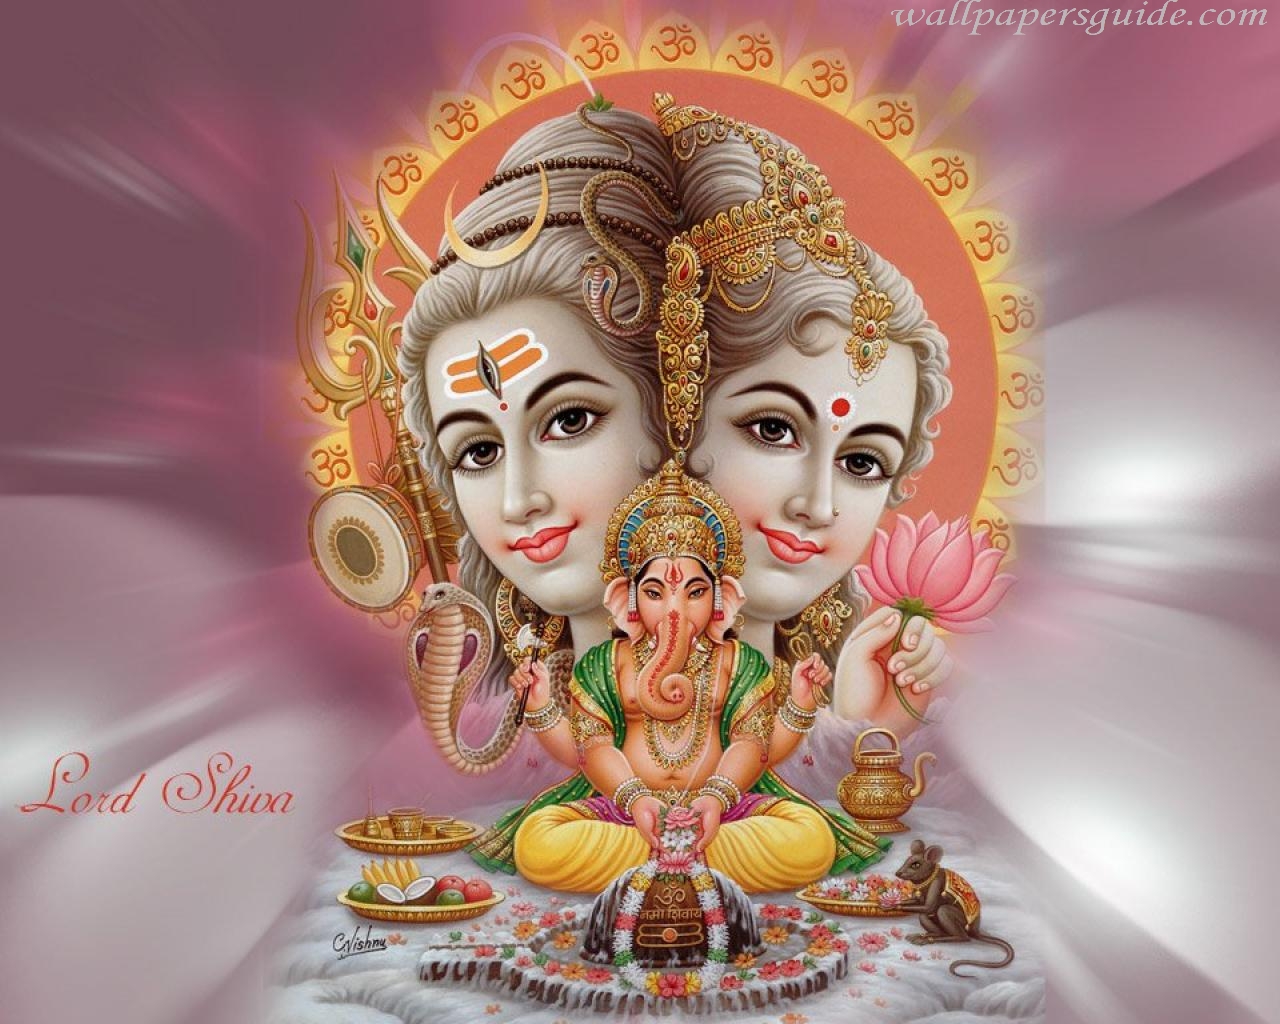 50+] HD Hindu God Wallpaper - WallpaperSafari